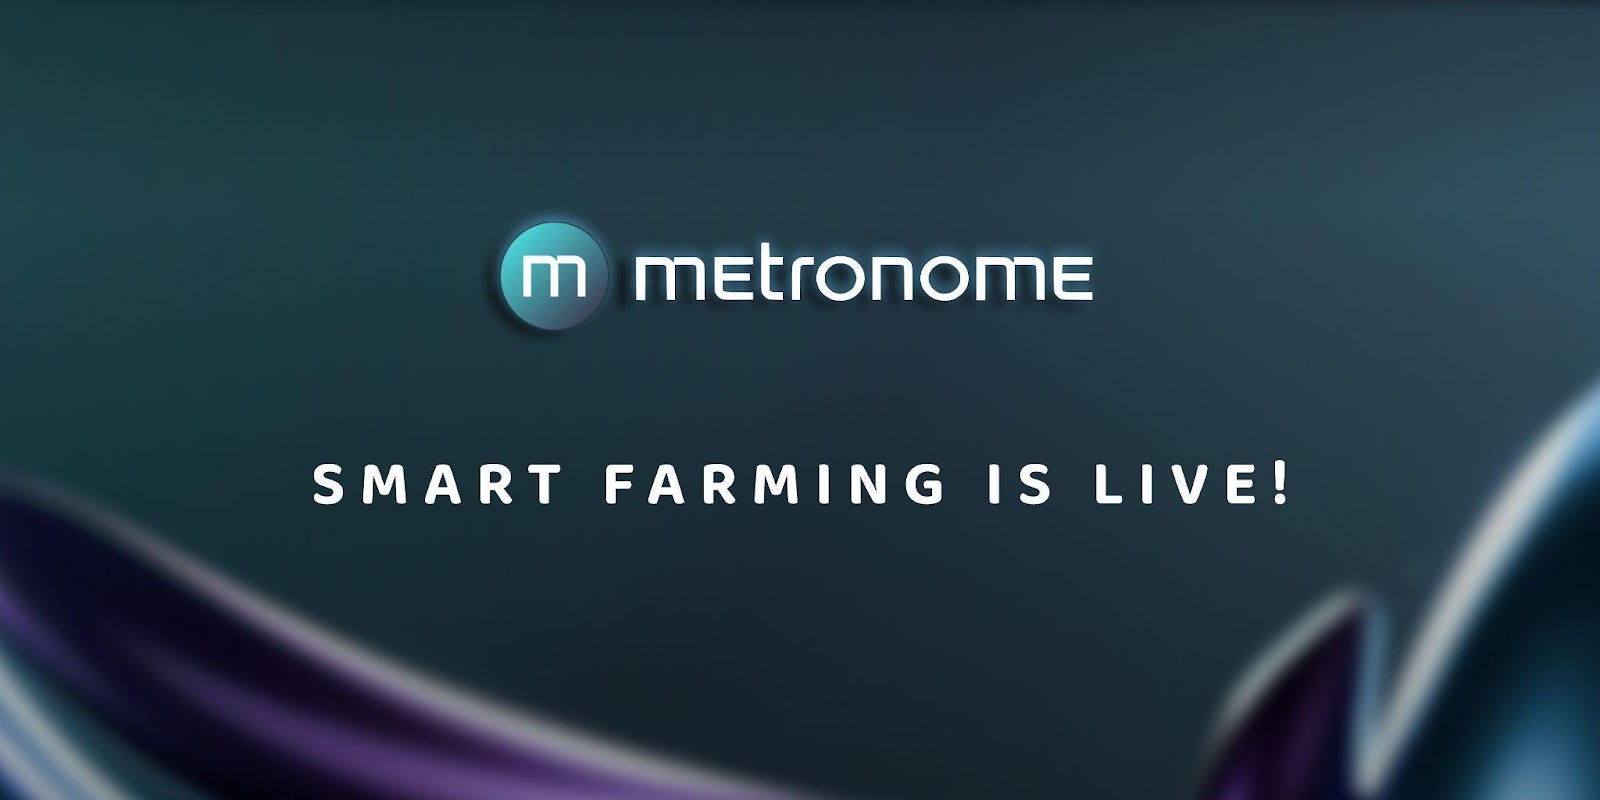 Metronome smart farming is live